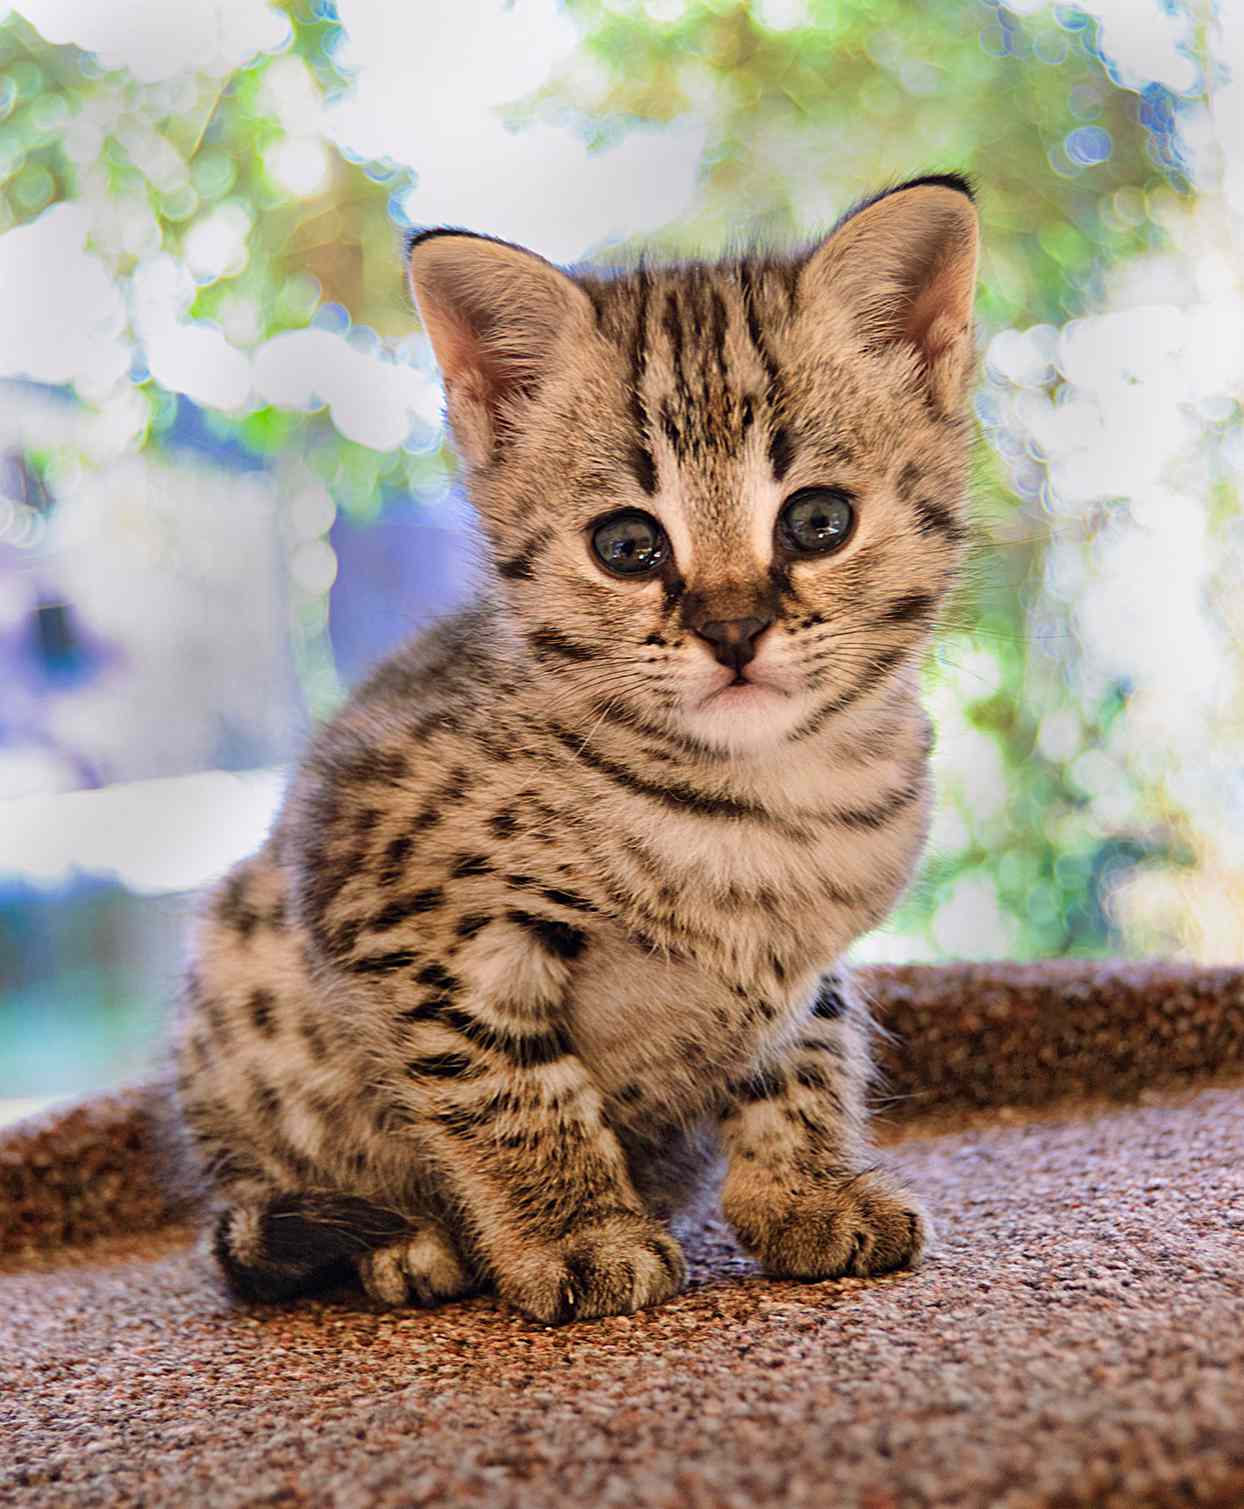 Striped Savannah kitten portrait with blue eyes